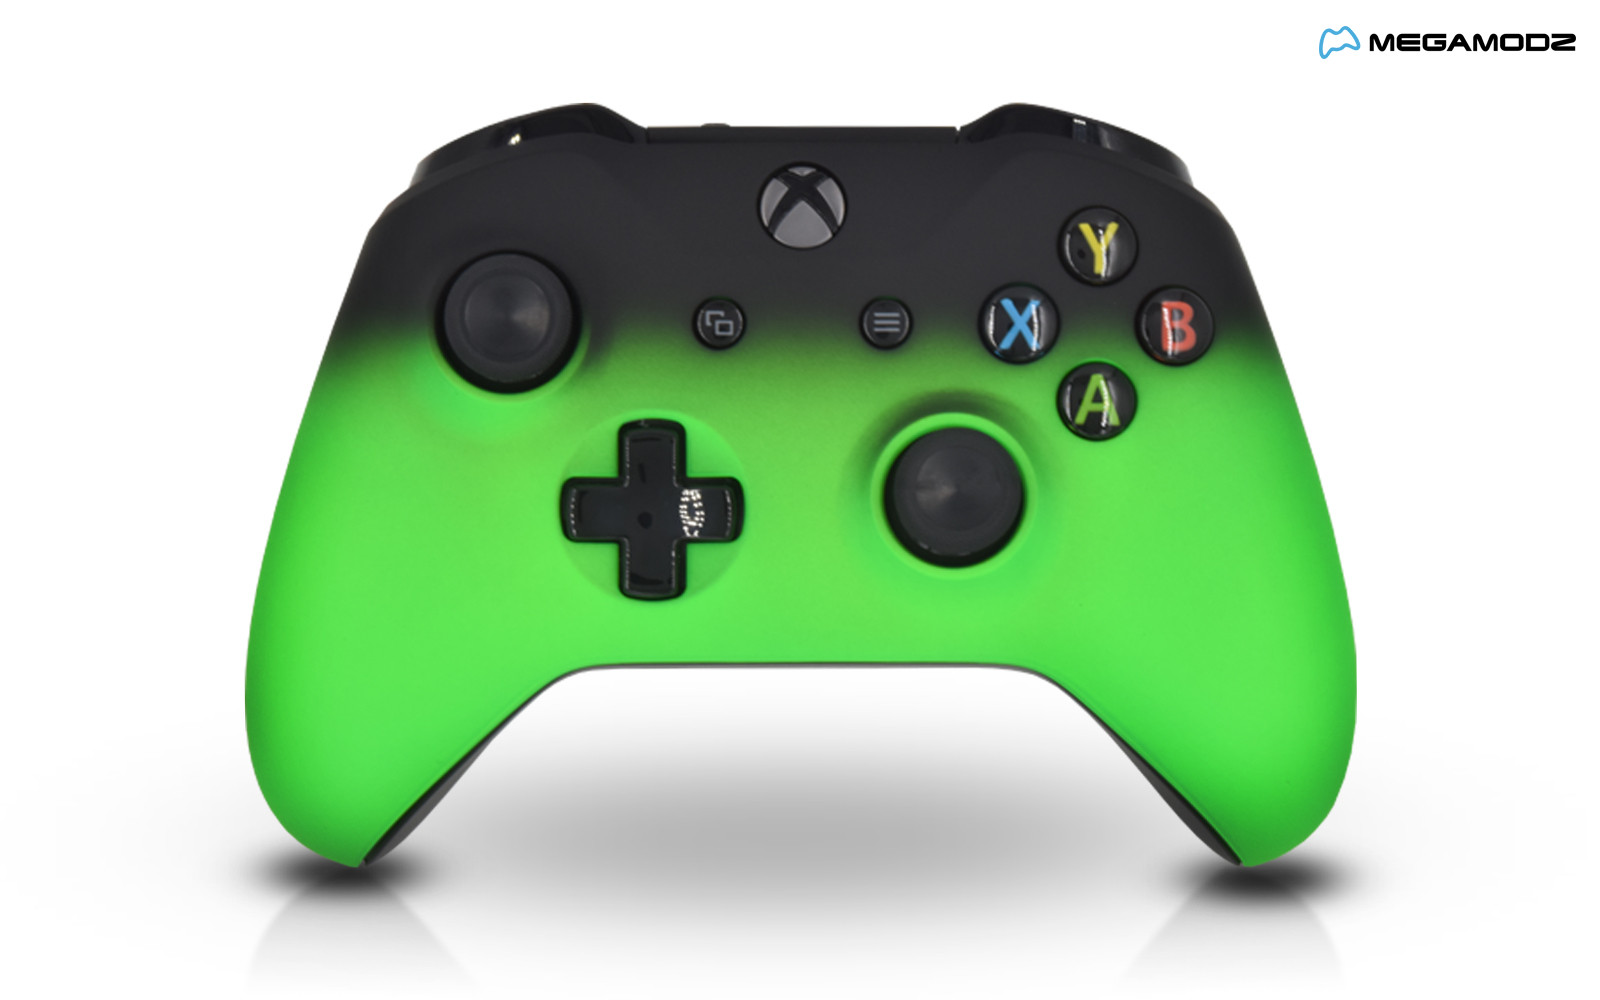 Modded Xbox One Rapid Fire Controller - Volcano Green ... - 1600 x 1000 jpeg 130kB